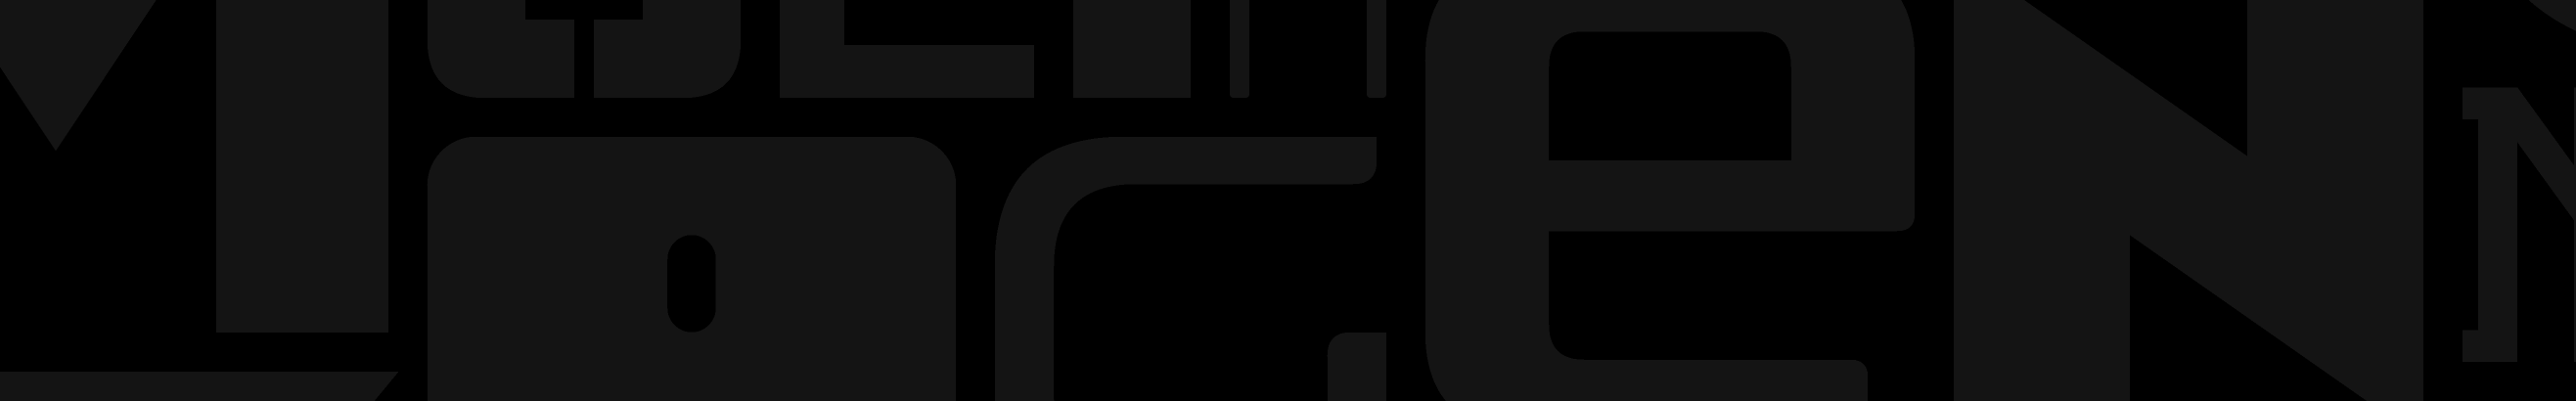 Graviton Font Foundry's profile banner